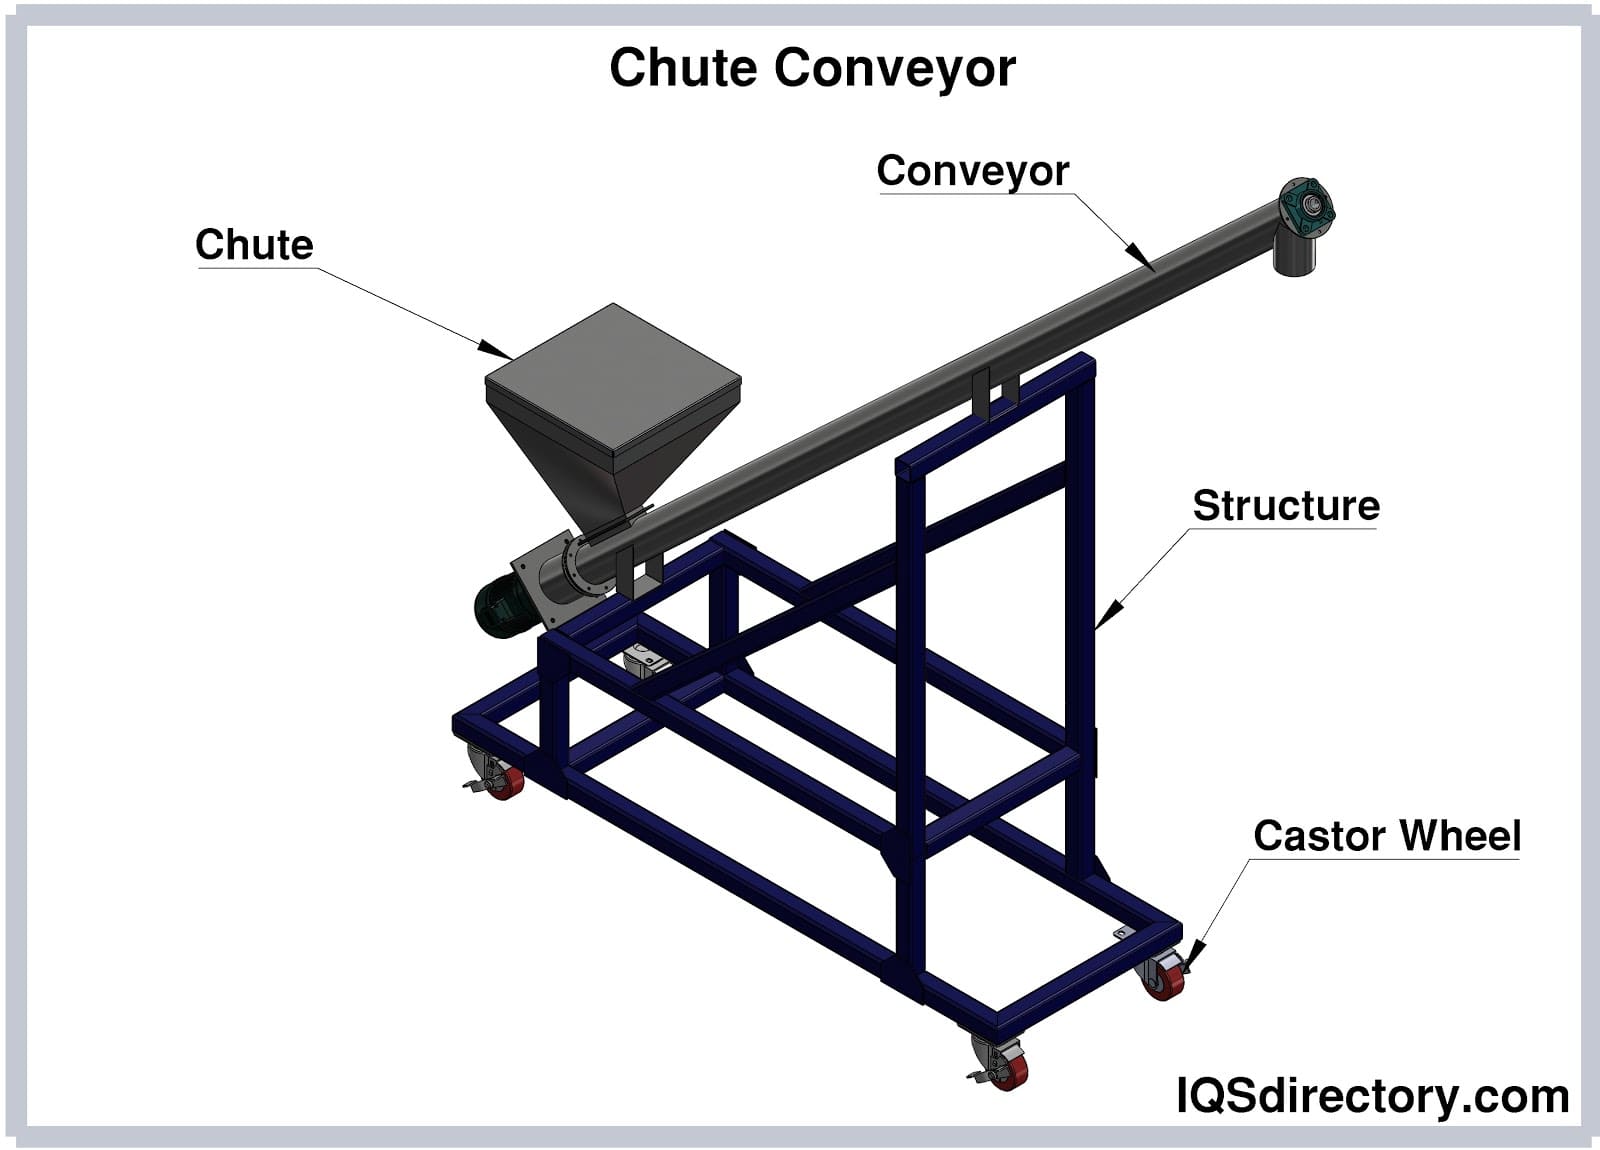 Chute Conveyor